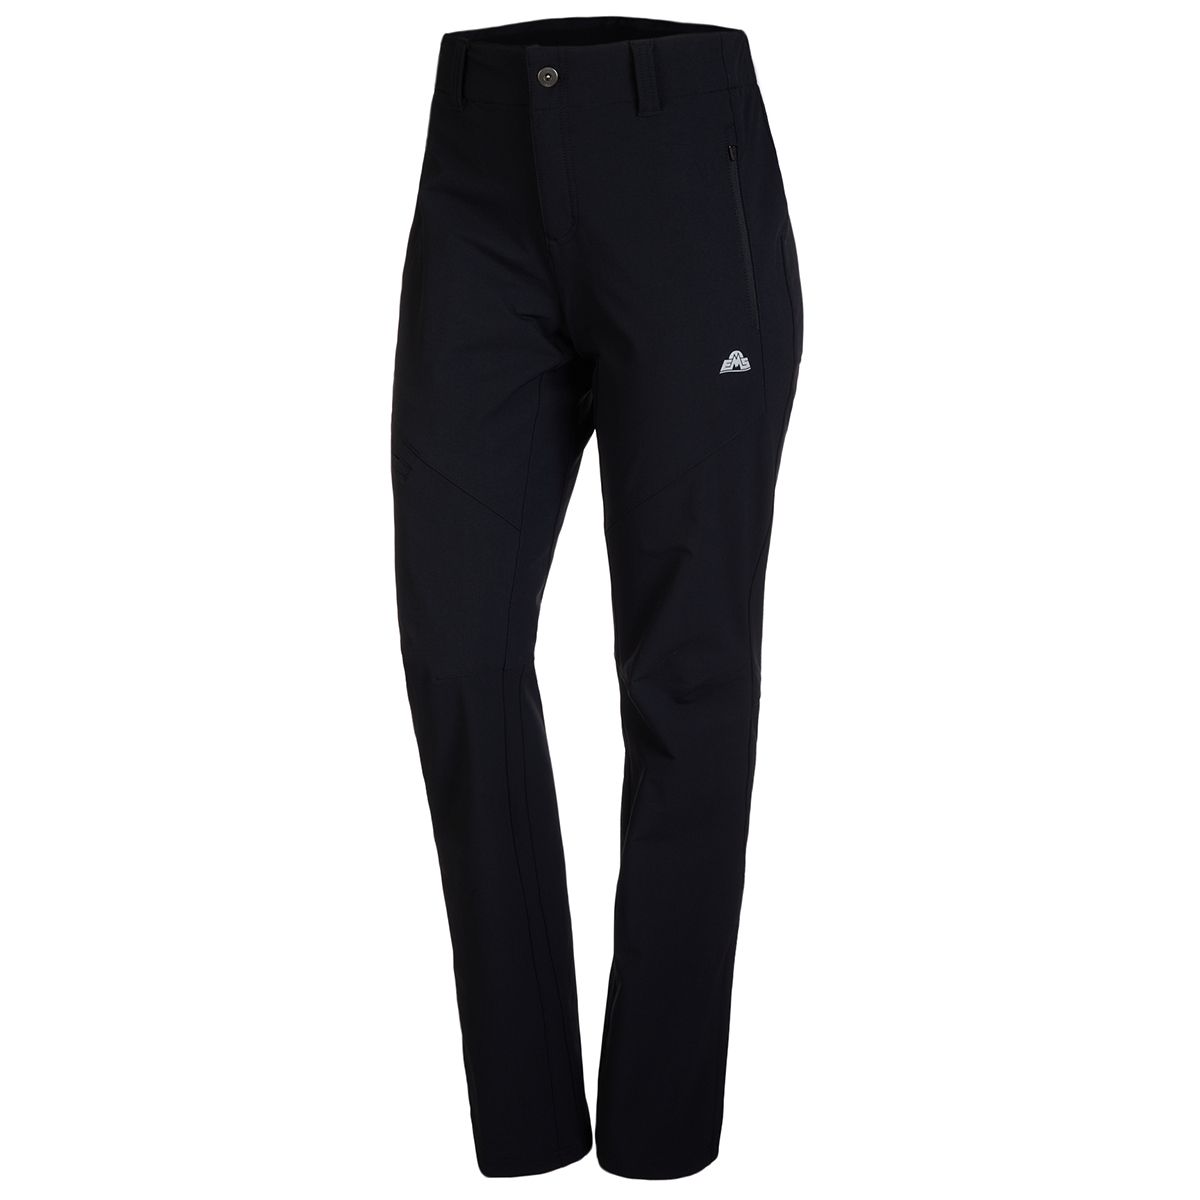 Eastern Mountain Sports Womens Ski pants black fleece lined size medium  NWOT - $51 - From Courtney